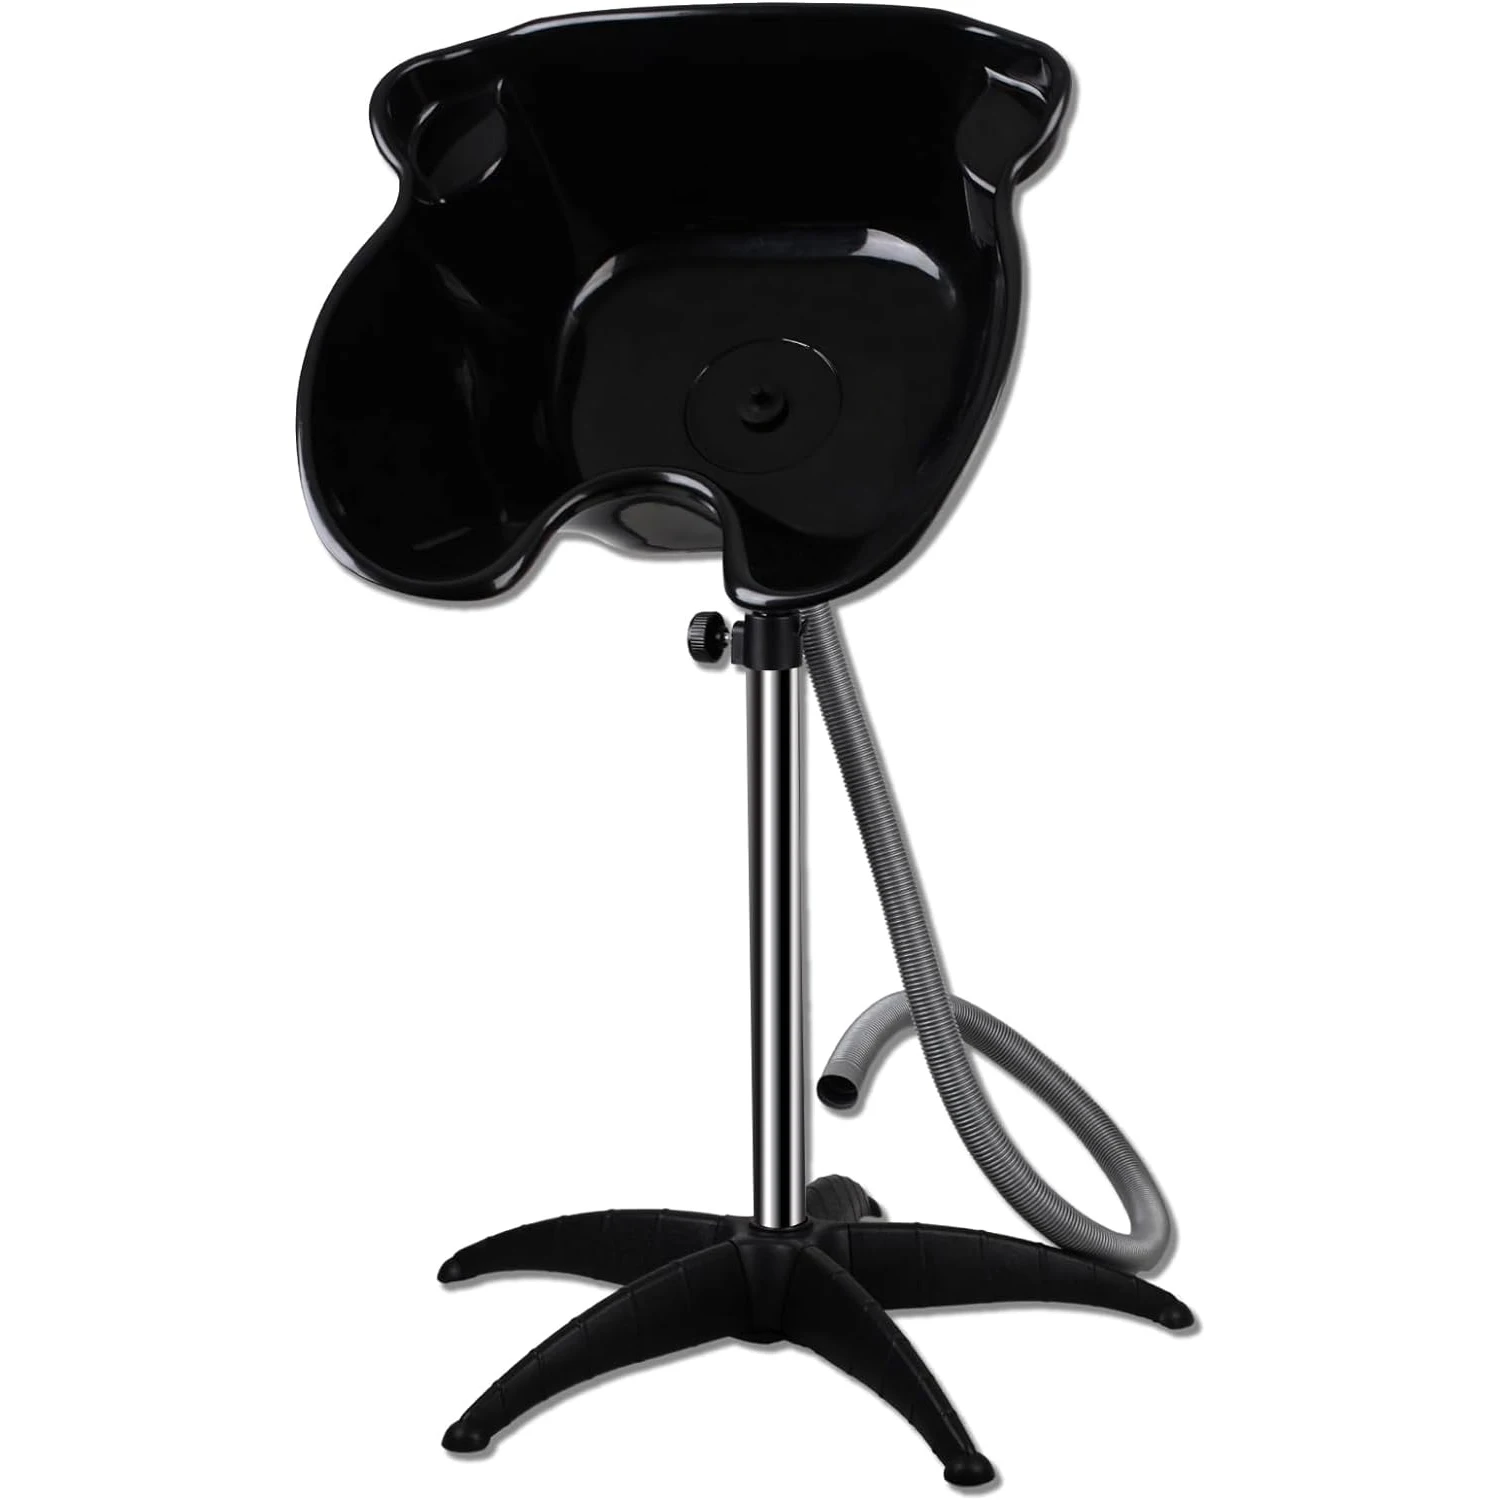 Shampoo Bowl Portable Salon Sink with Adjustable Height/Drain, Sprinkler with Switch Hair Washing Basin Salon Chair Barber Deep